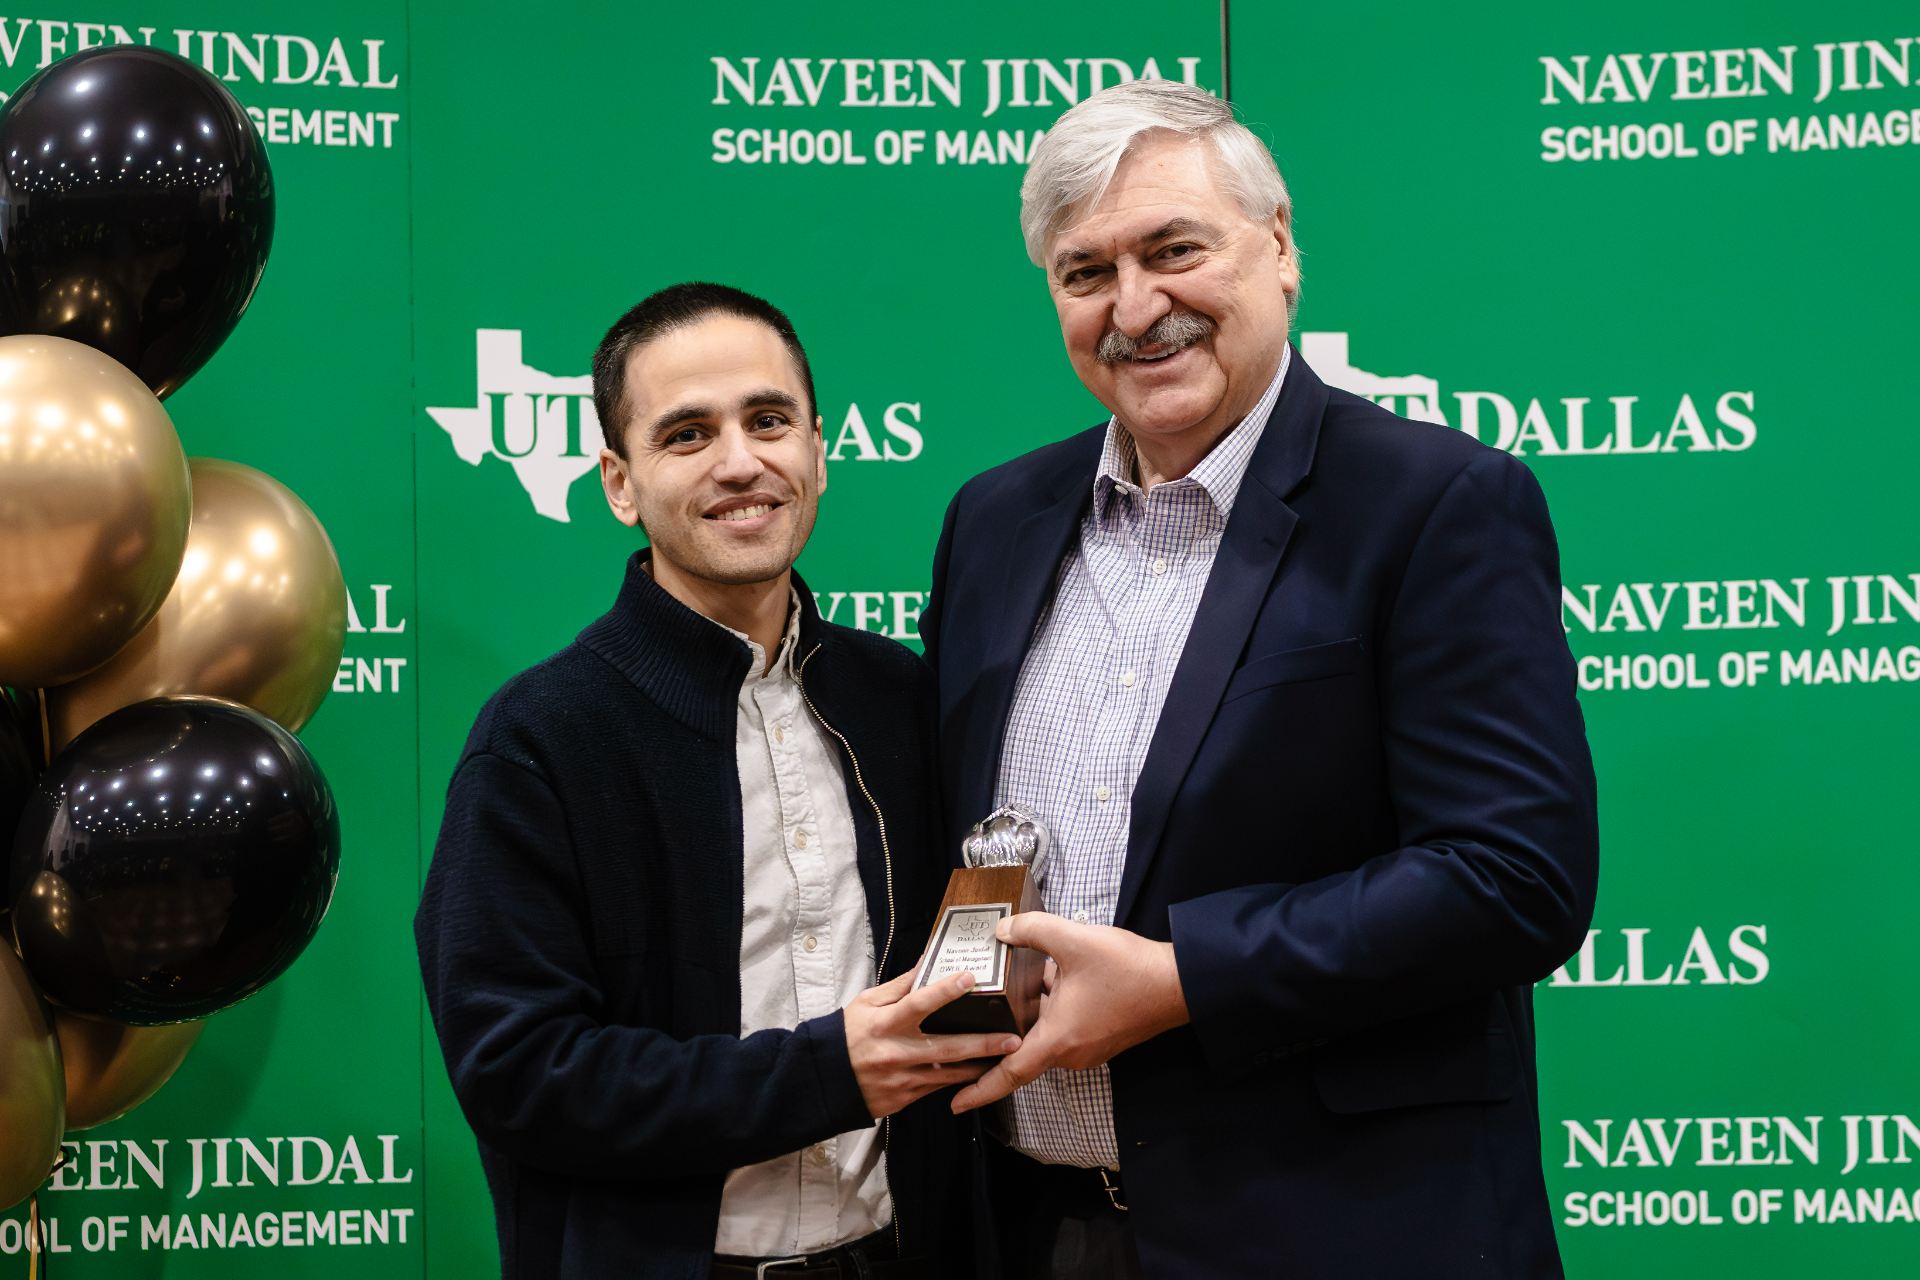 Dean Pirkul presents Graduate Faculty of the Year OWLIE award to Ignacio Rios Uribe.